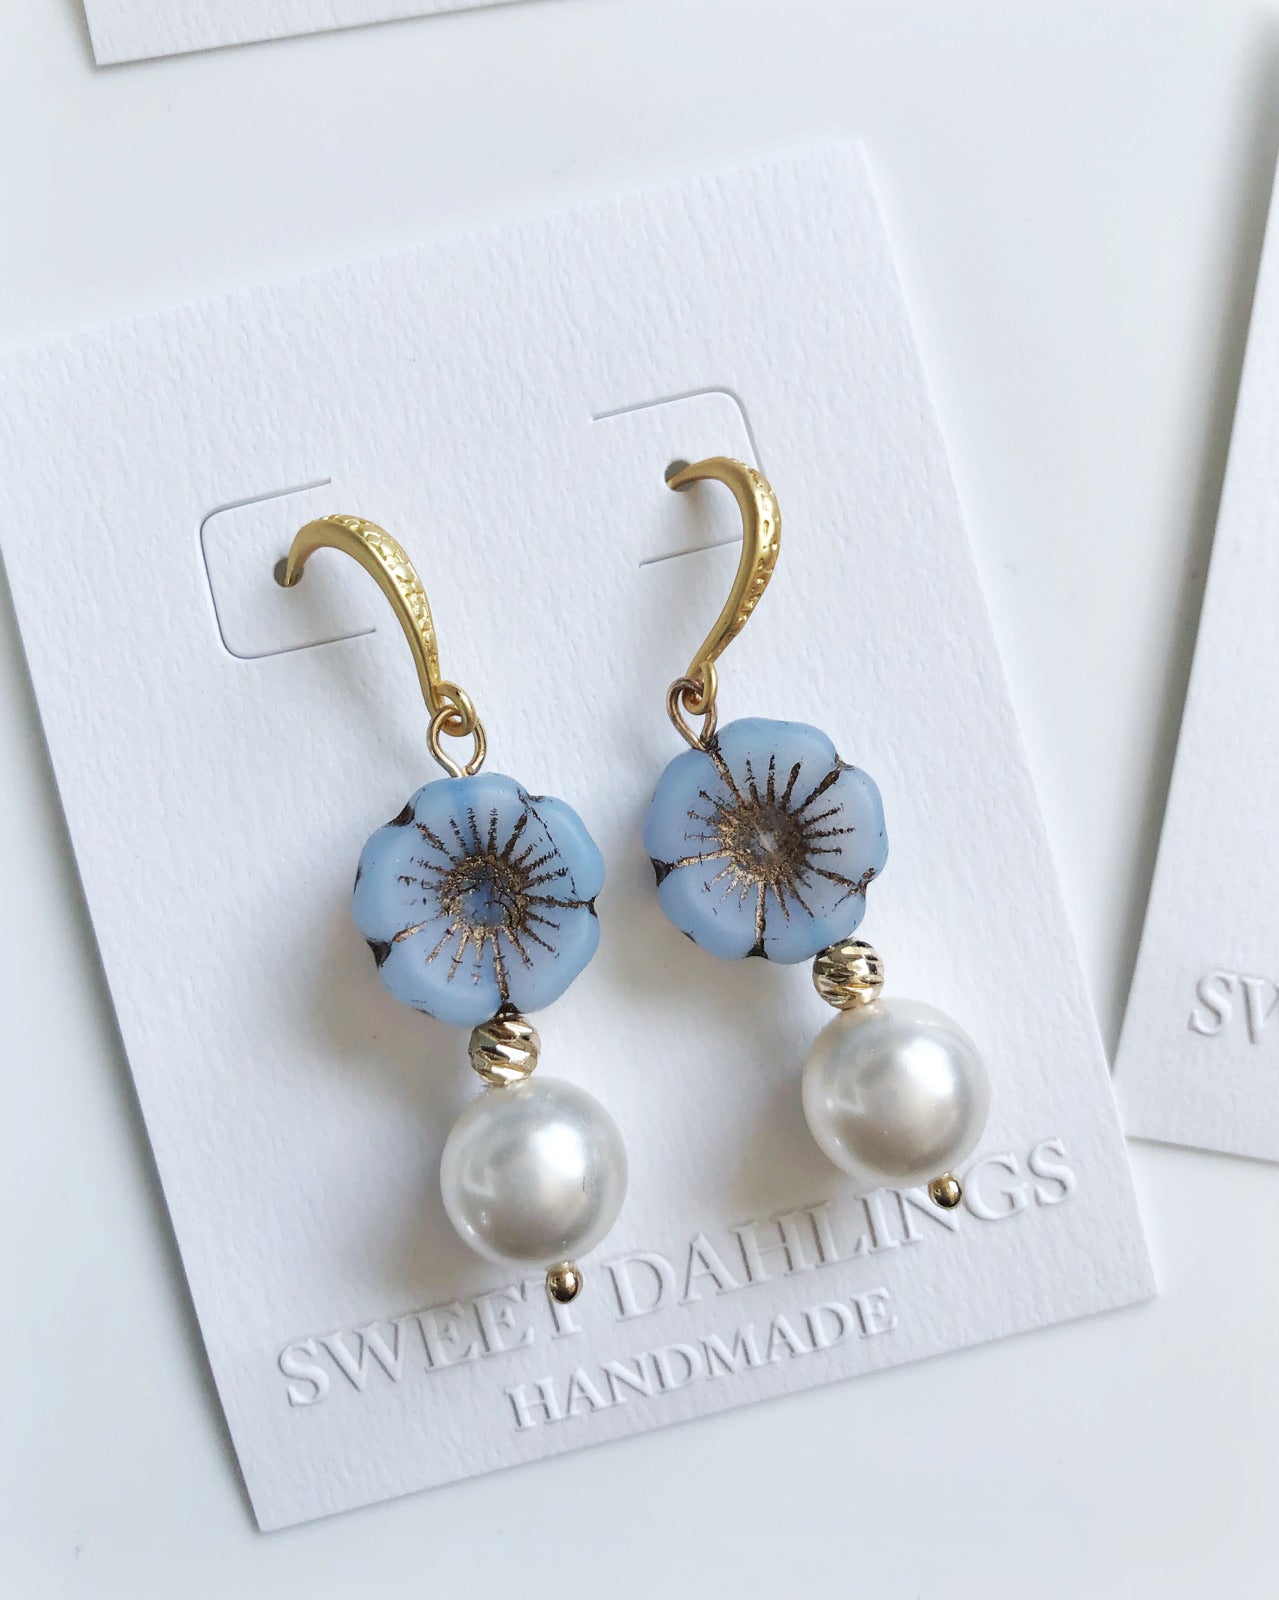 Something blue, something gold earrings with Swarovski crystal pearls